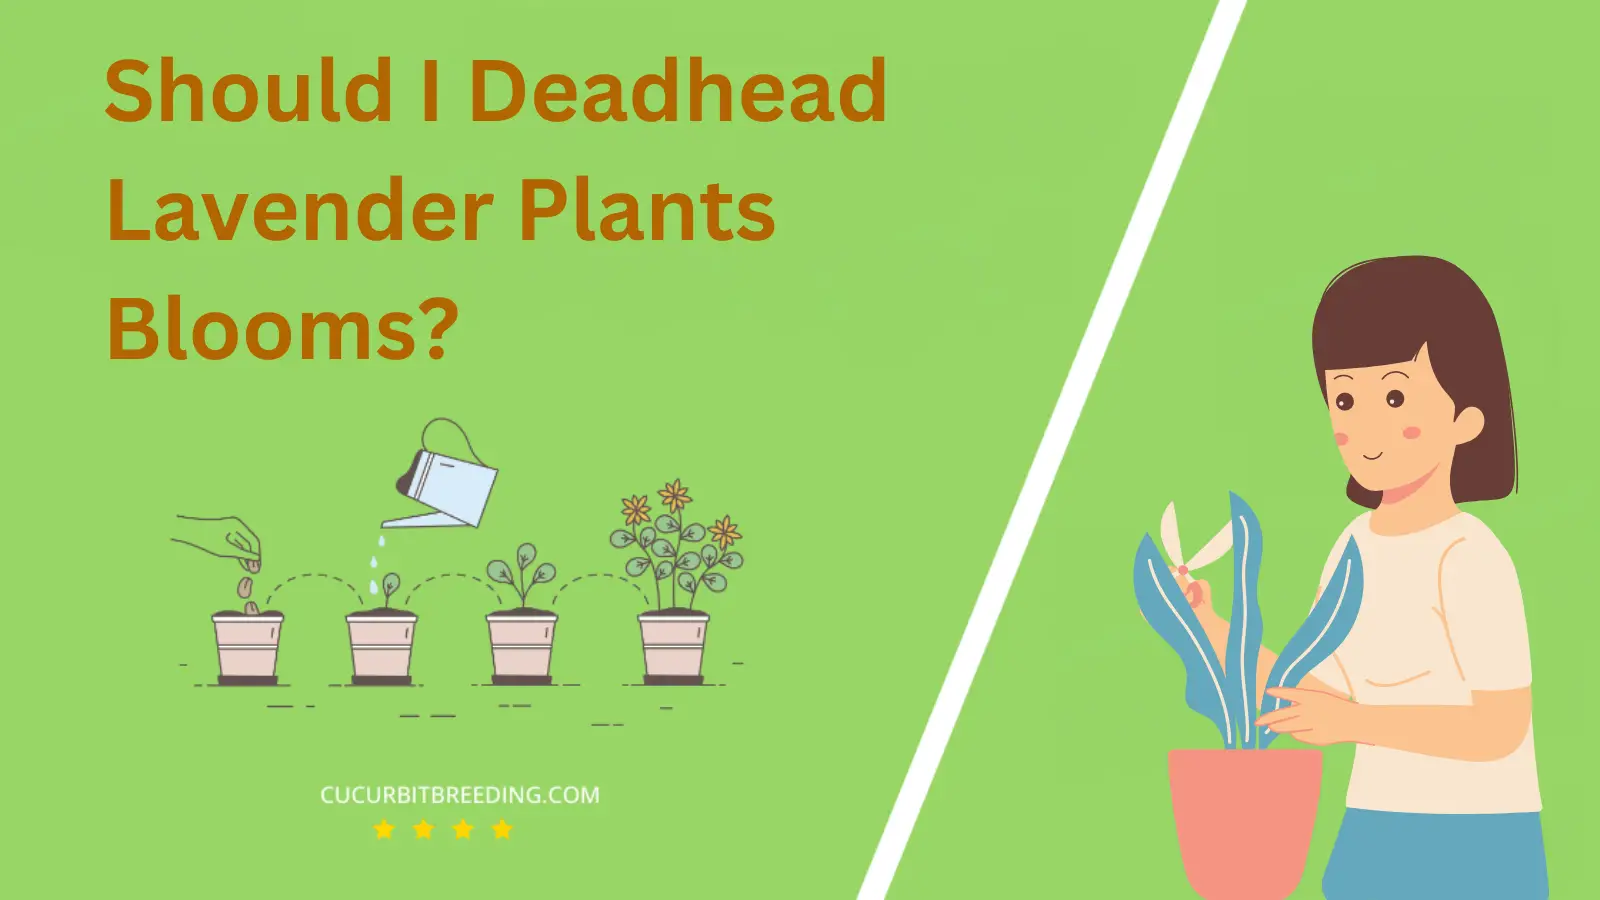 Should I Deadhead Lavender Plants Blooms?